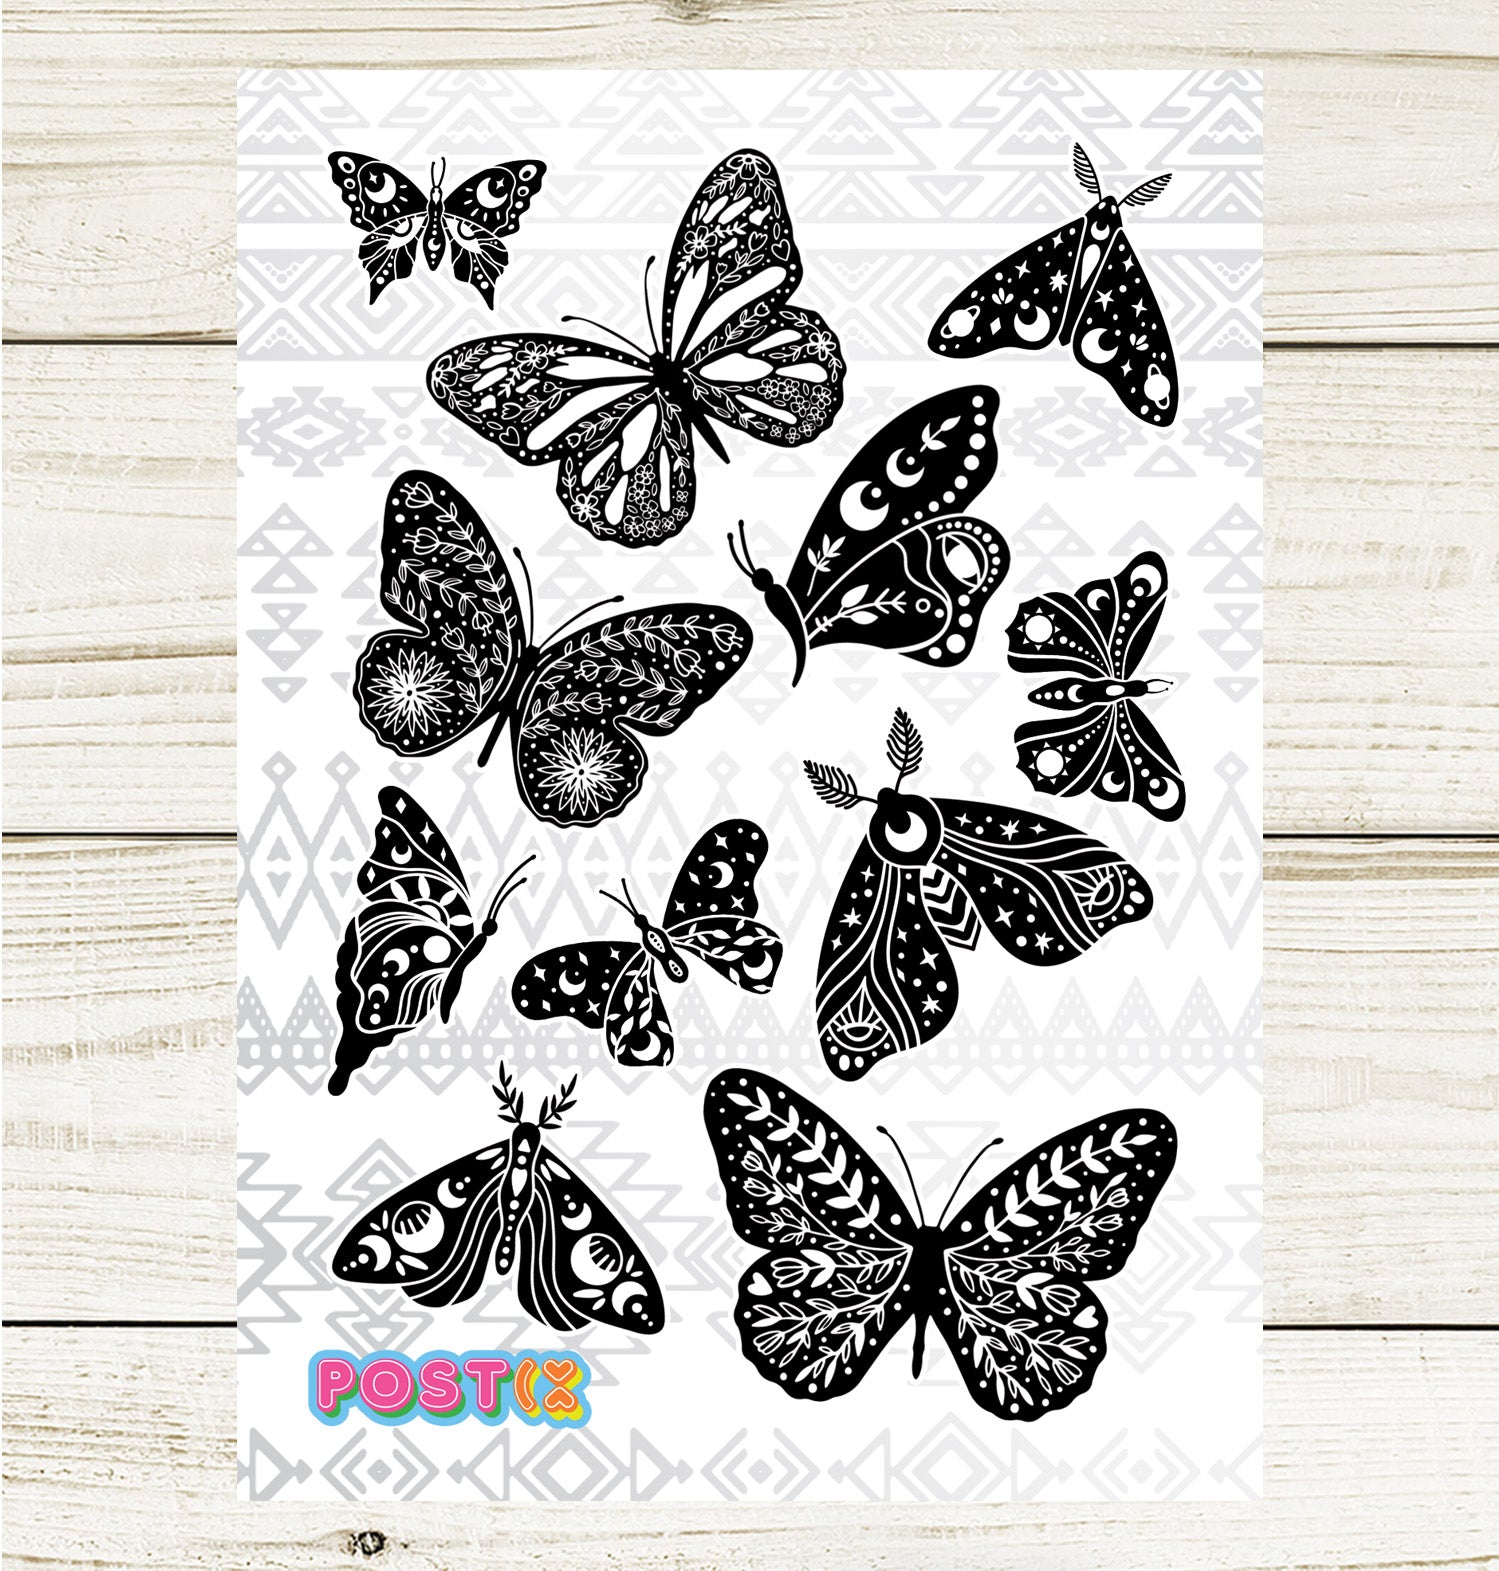 Black and White Bohemian Butterflies A6 Sticker Sheet